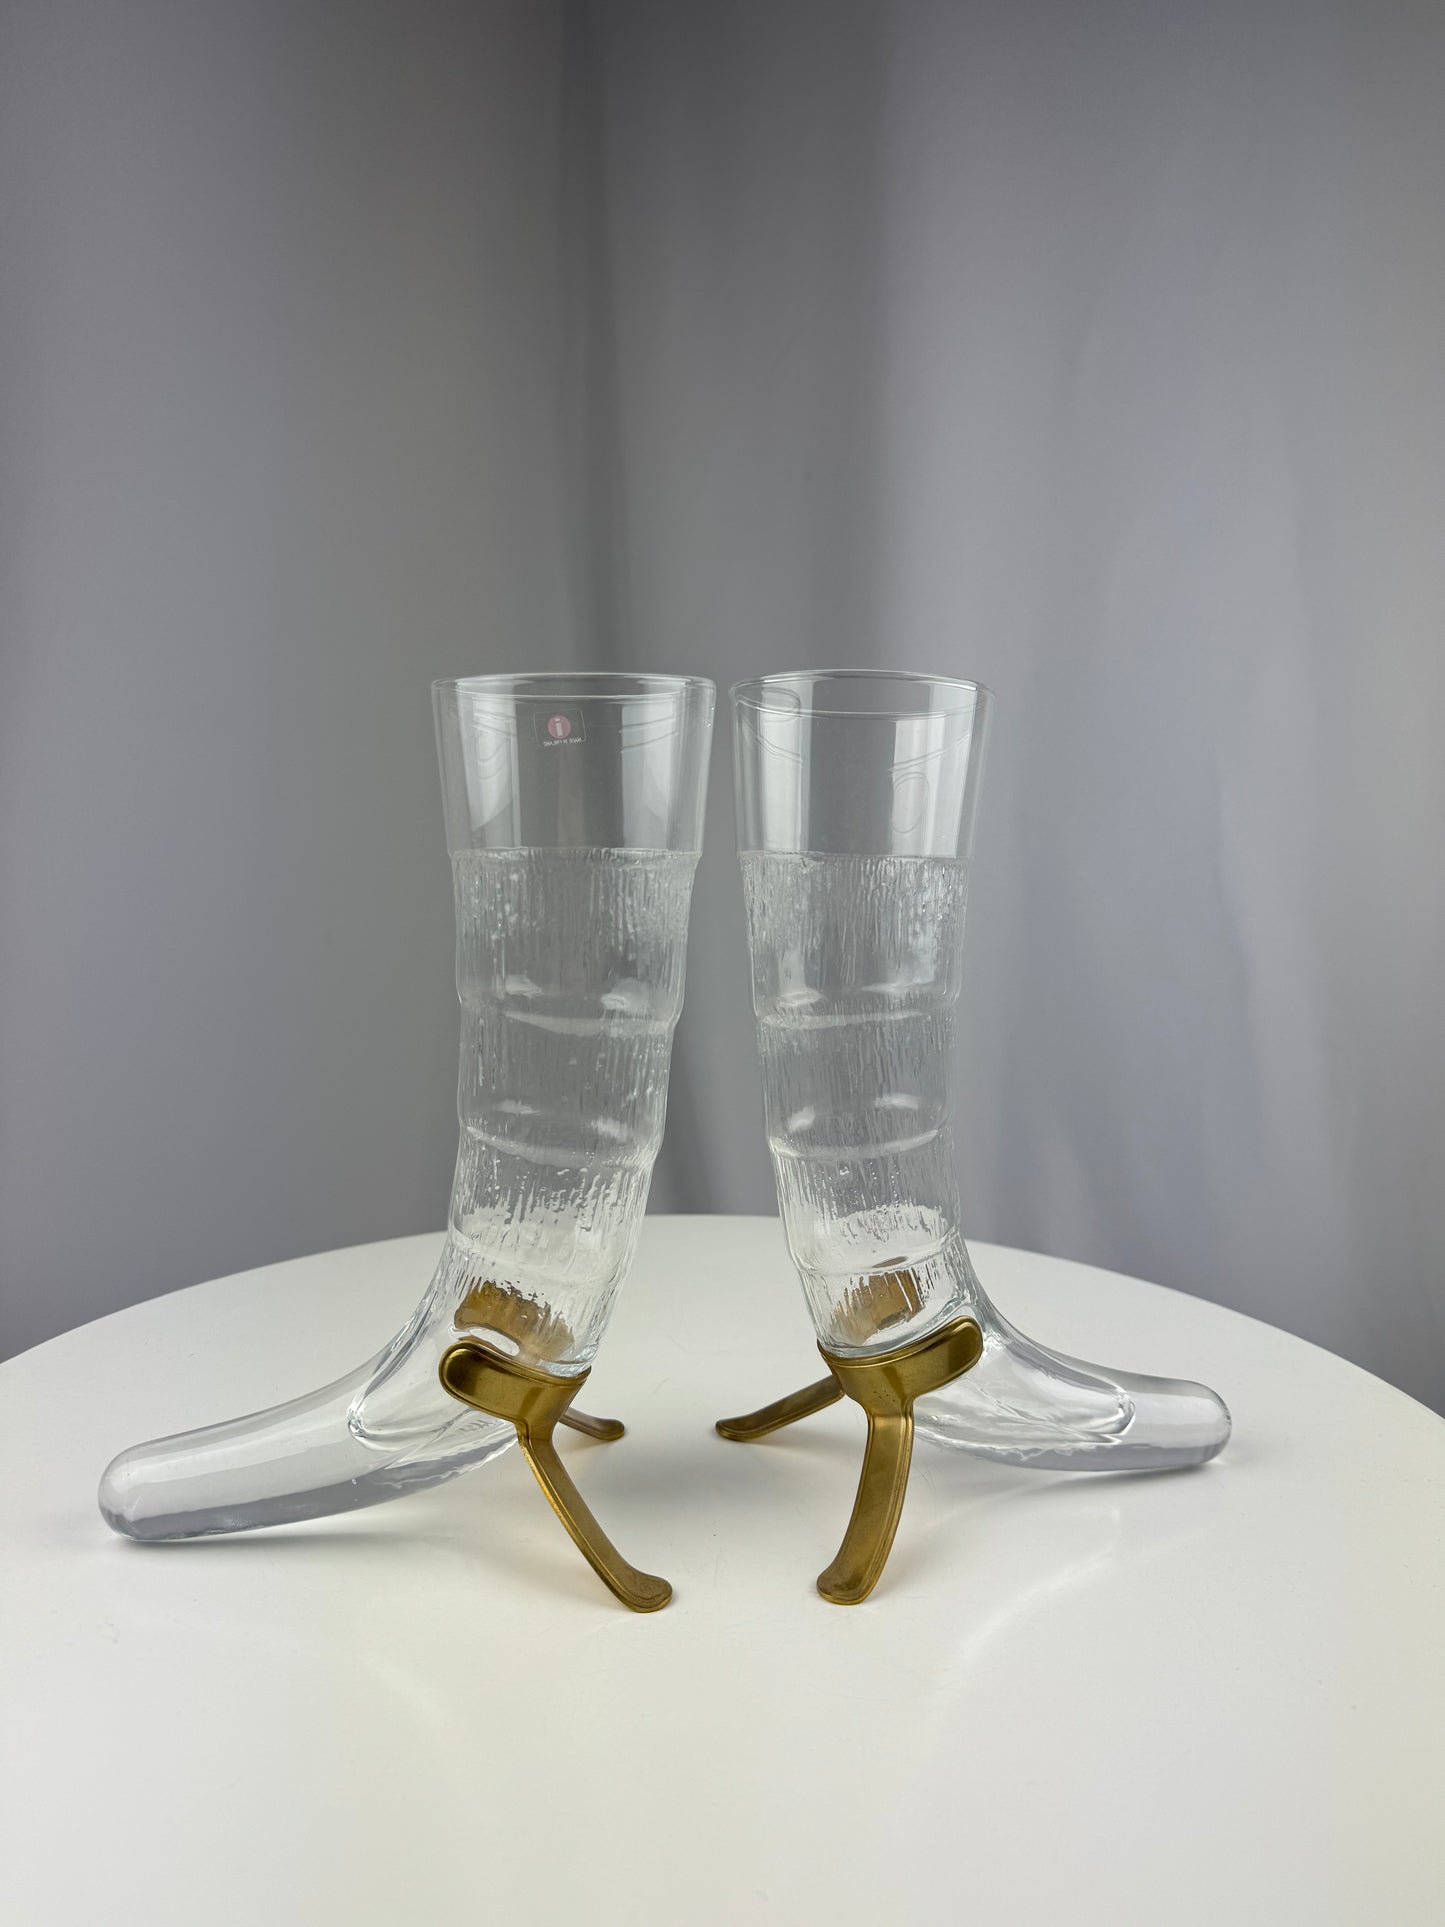 Iittala HARALDs HORN Beer Glasses by Valto Kokko (6)